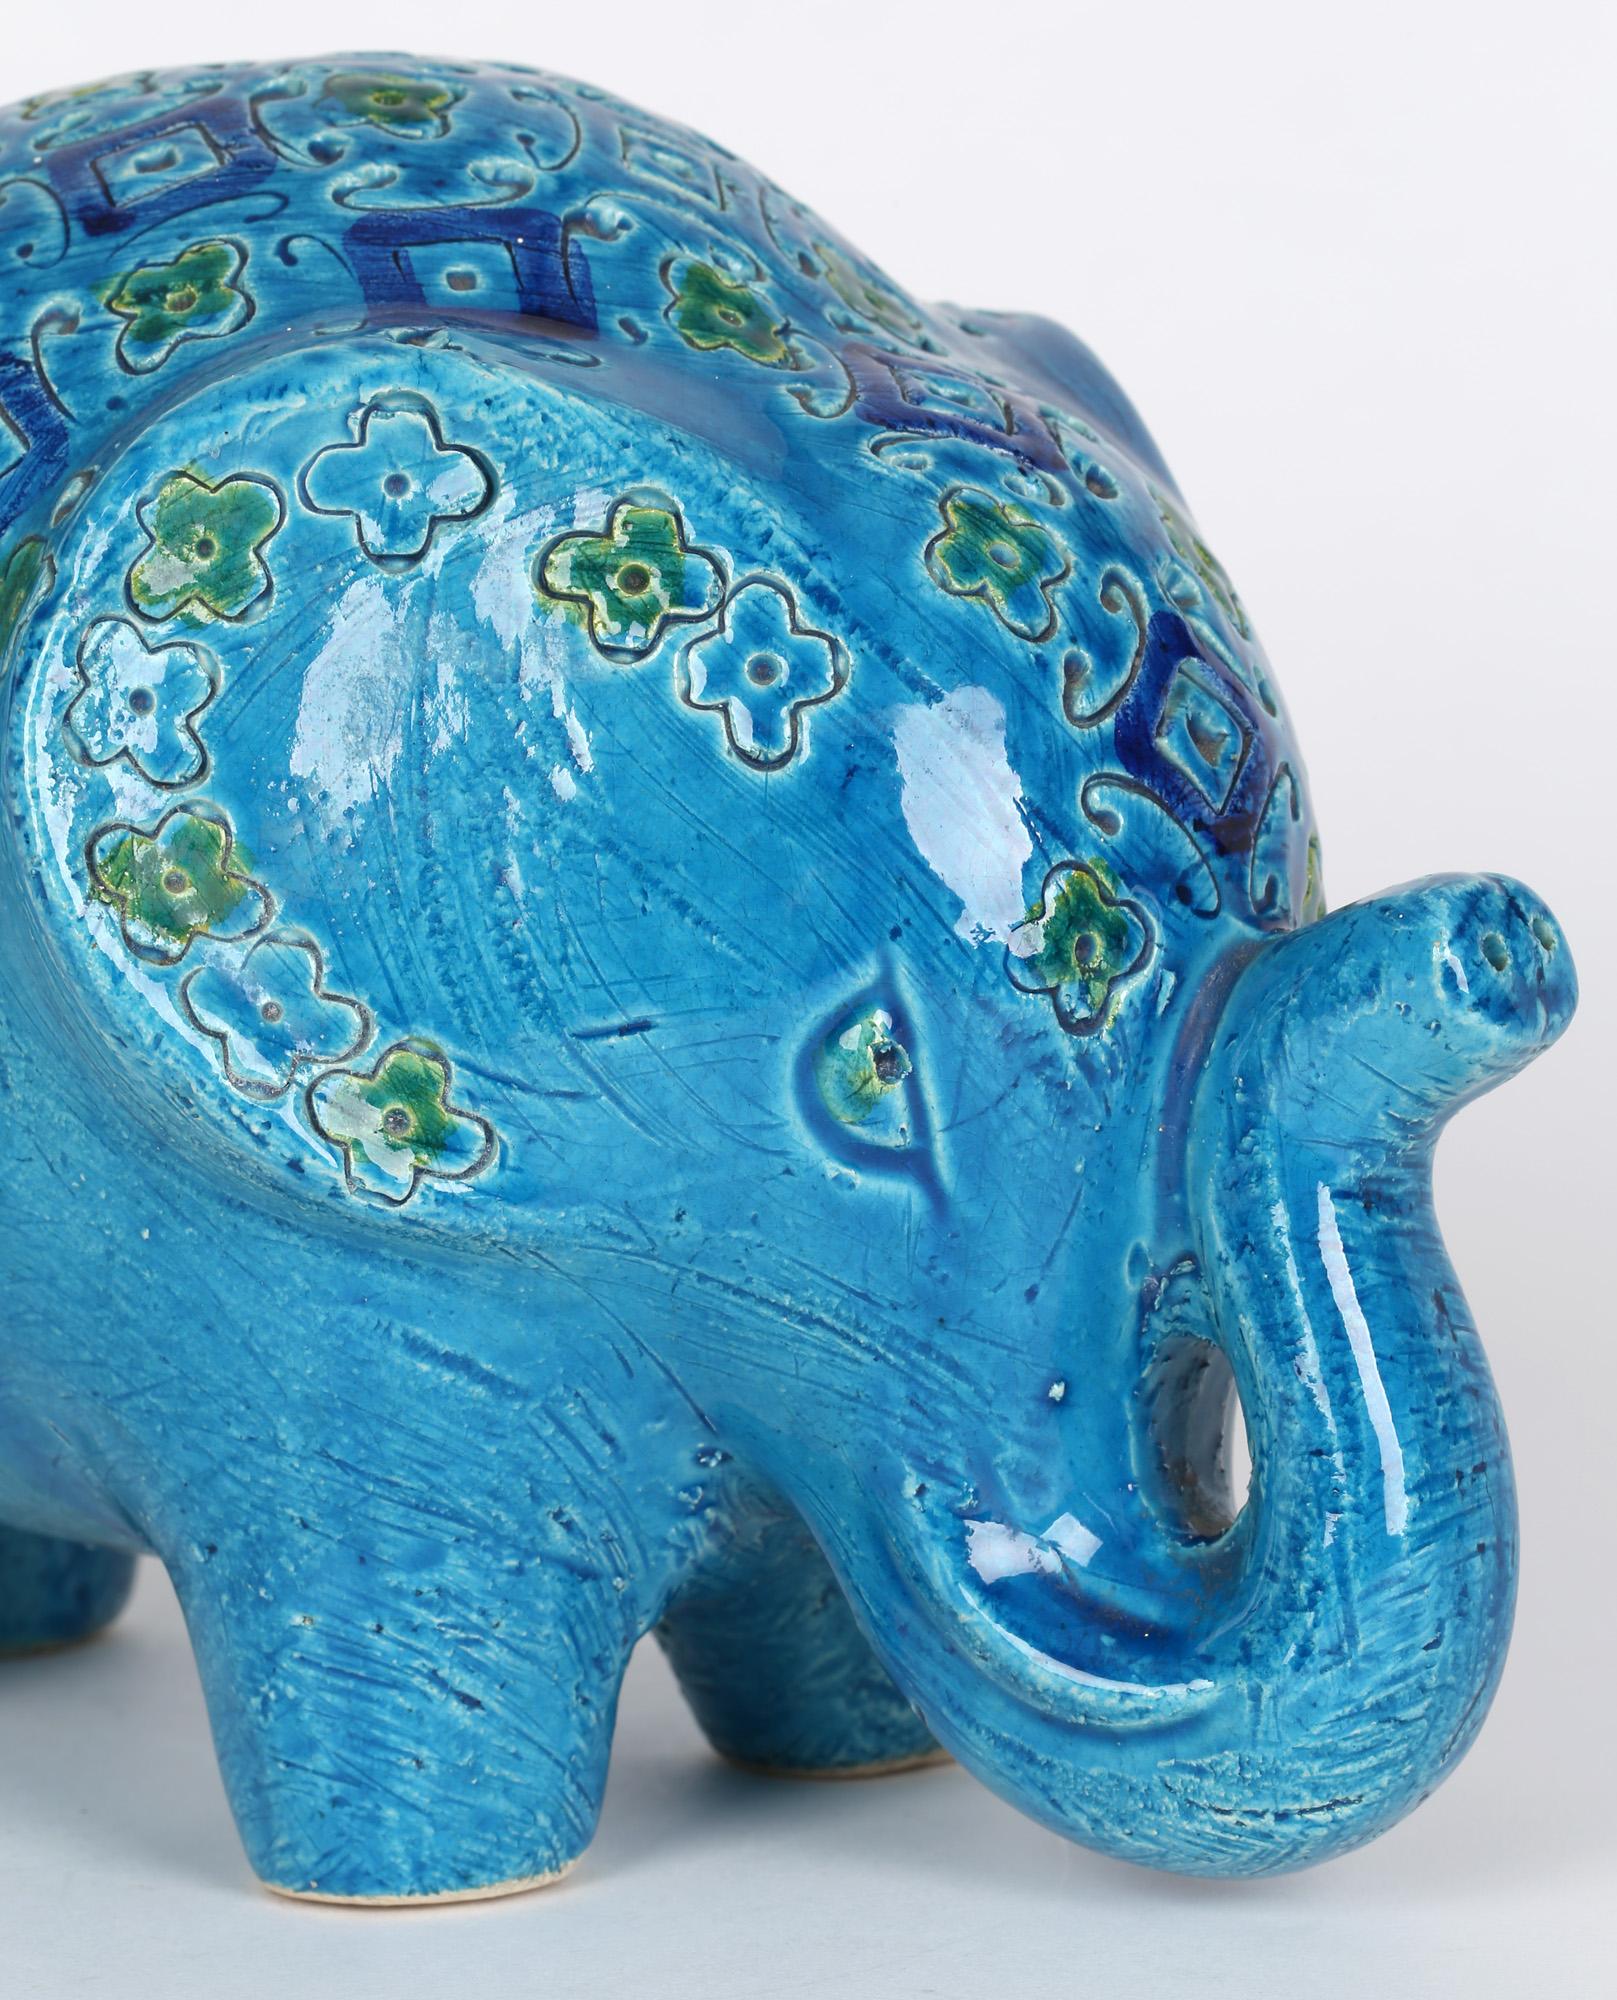 Aldo Londi Italian Bitossi Rimini Blu Stylized Pottery Elephant Figure 3